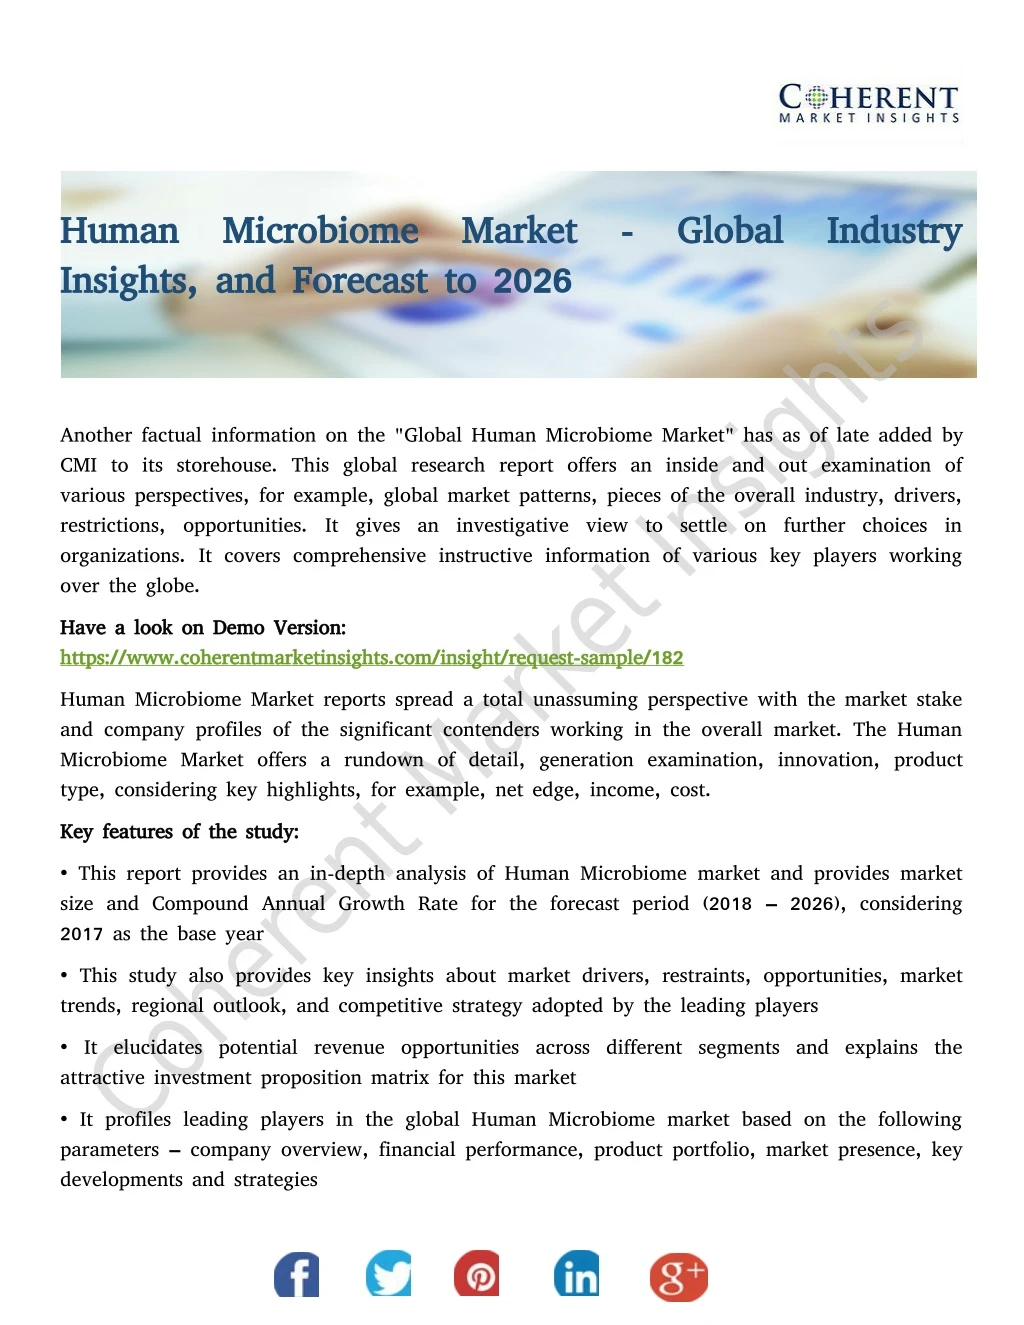 human microbiome market global industry human